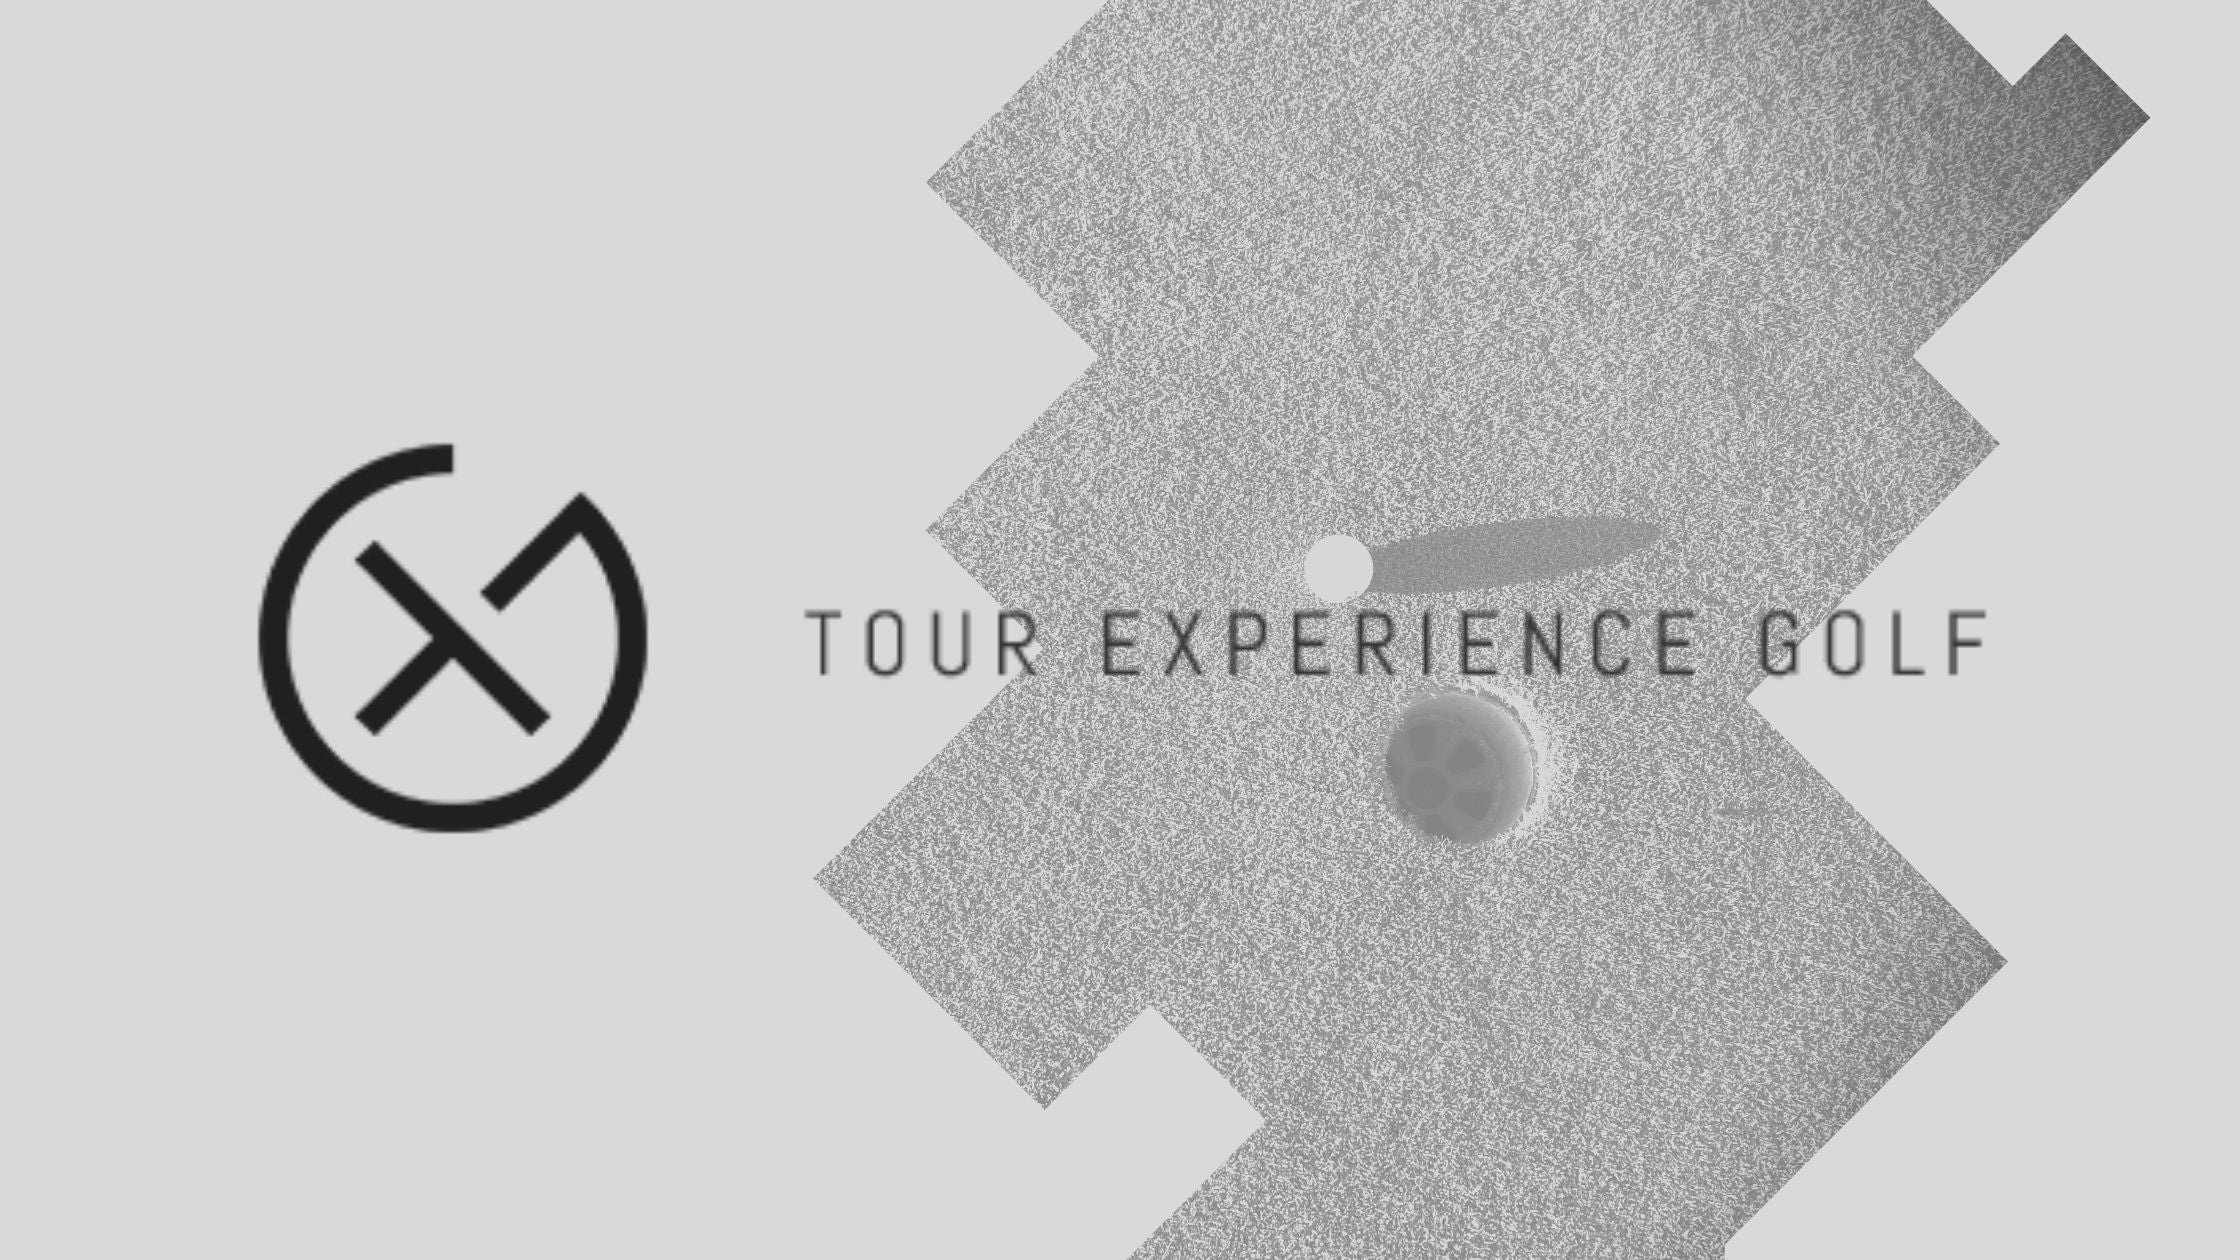 Tour Experience Golf & Arccos Golf